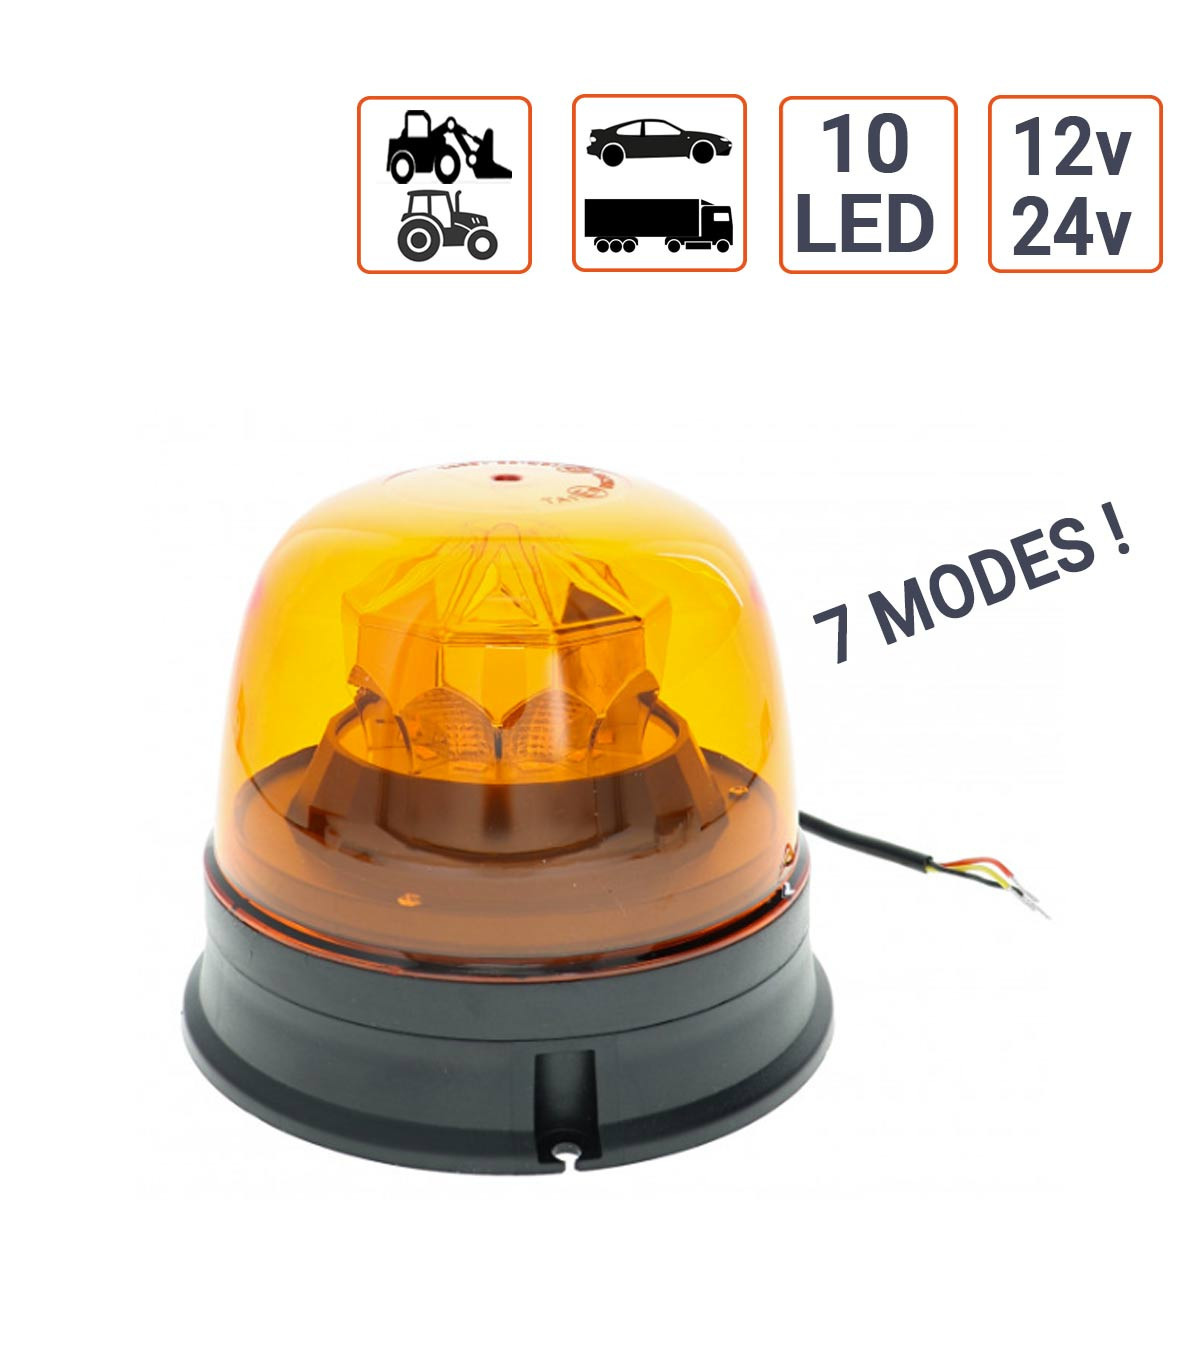 Gyrophare LED 12/24V à poser 7 modes proposés, le TOP !